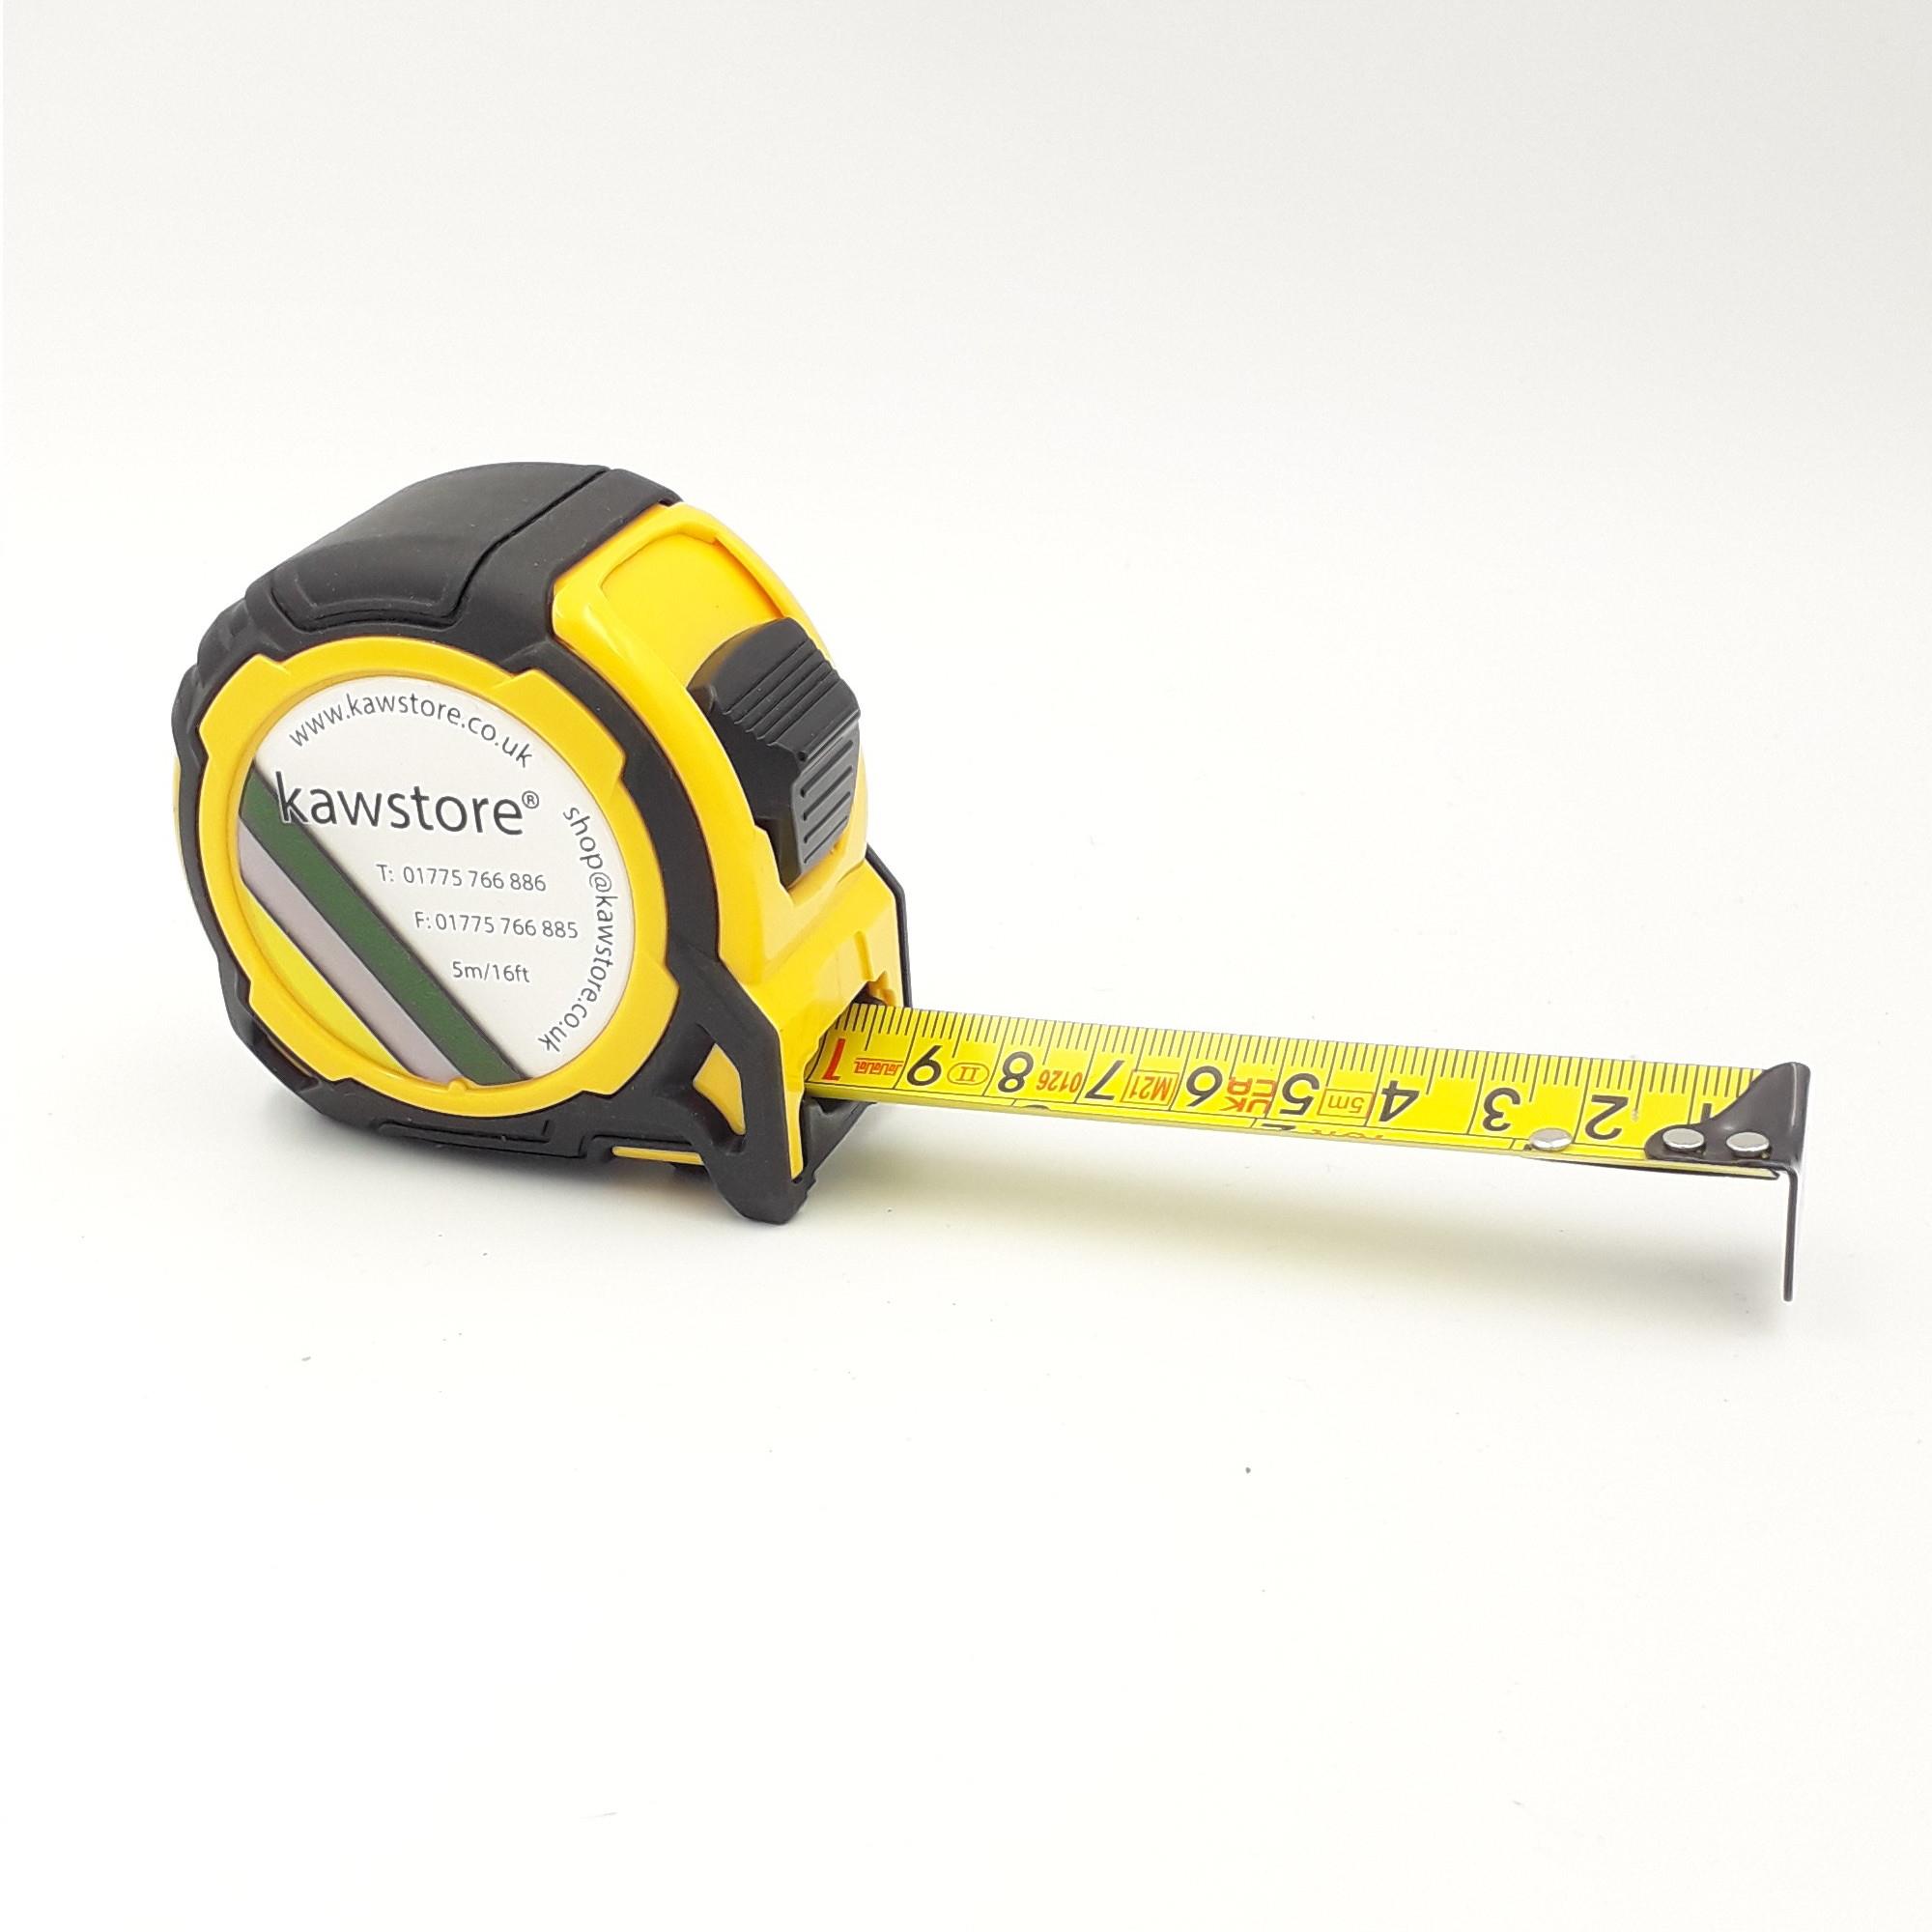 kawstore Fan Tape Measure; Yellow/Black (YEL) (BK); 5m/16ft